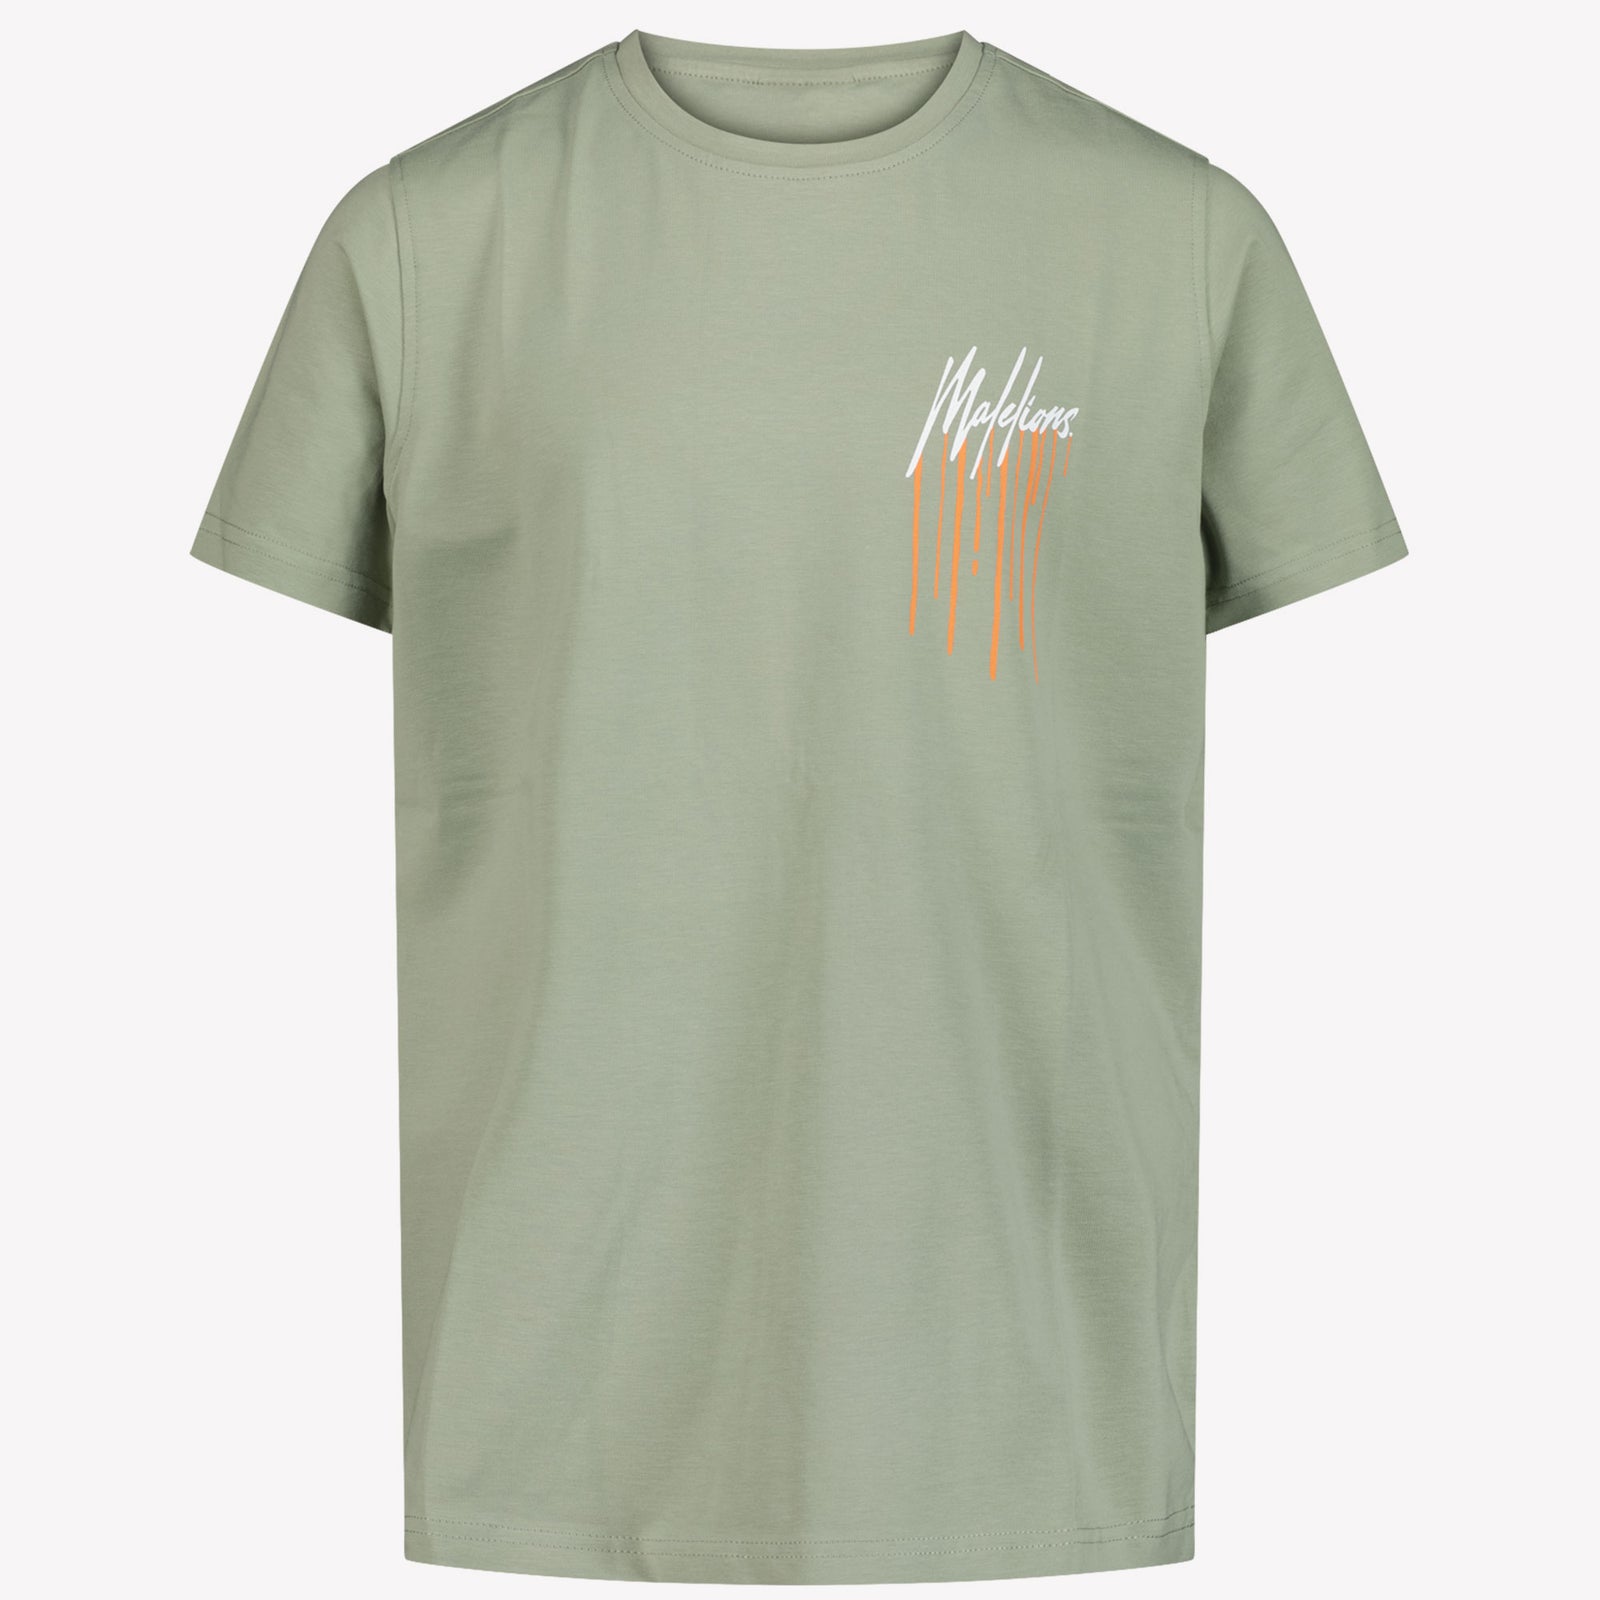 Malelions Unisex T-Shirt Armee